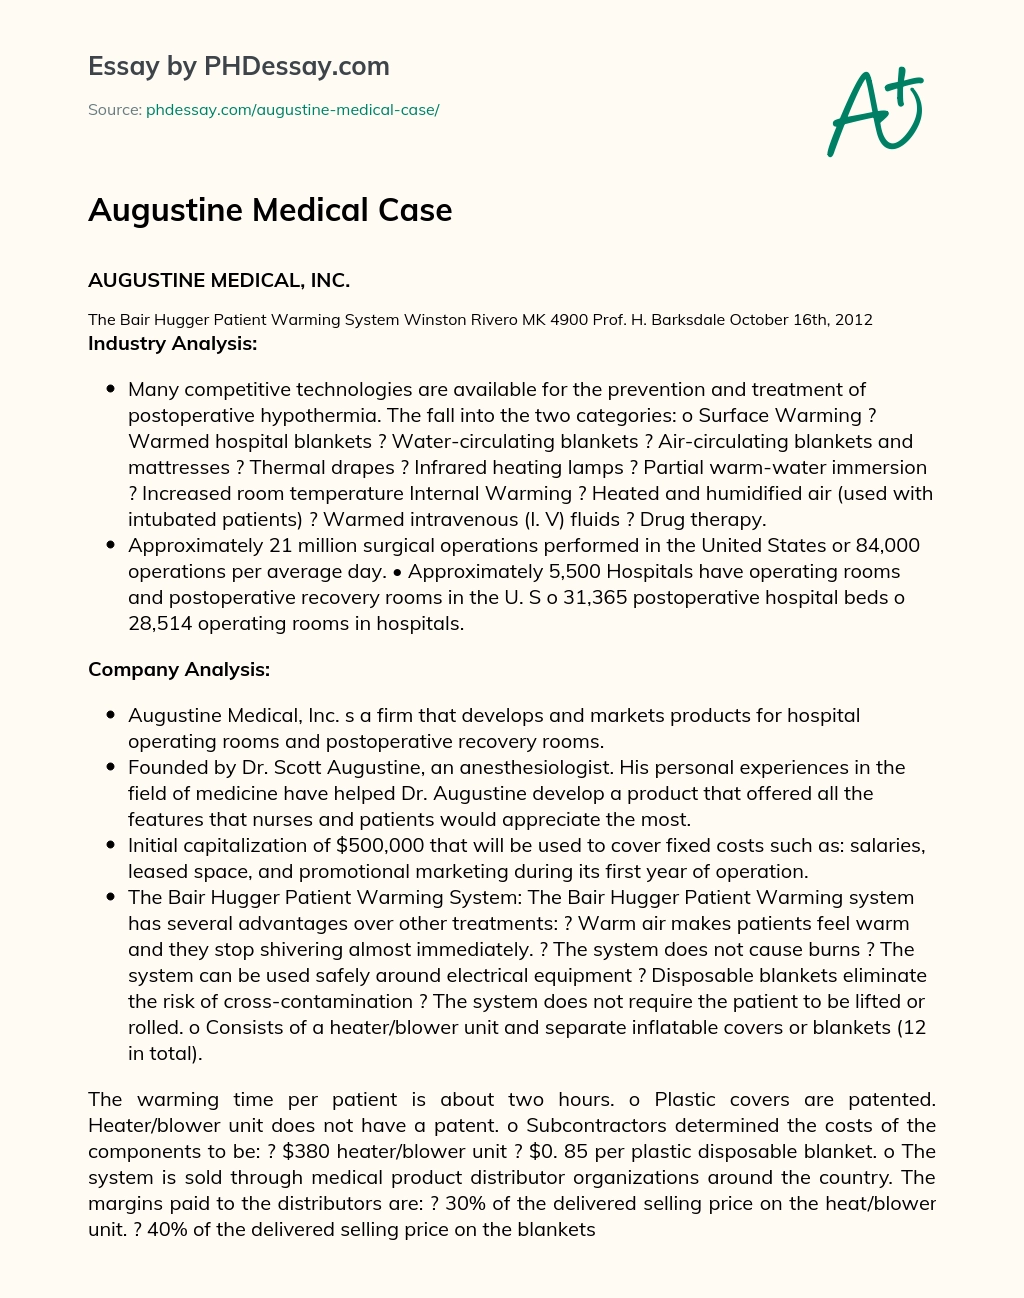 Augustine Medical Case essay